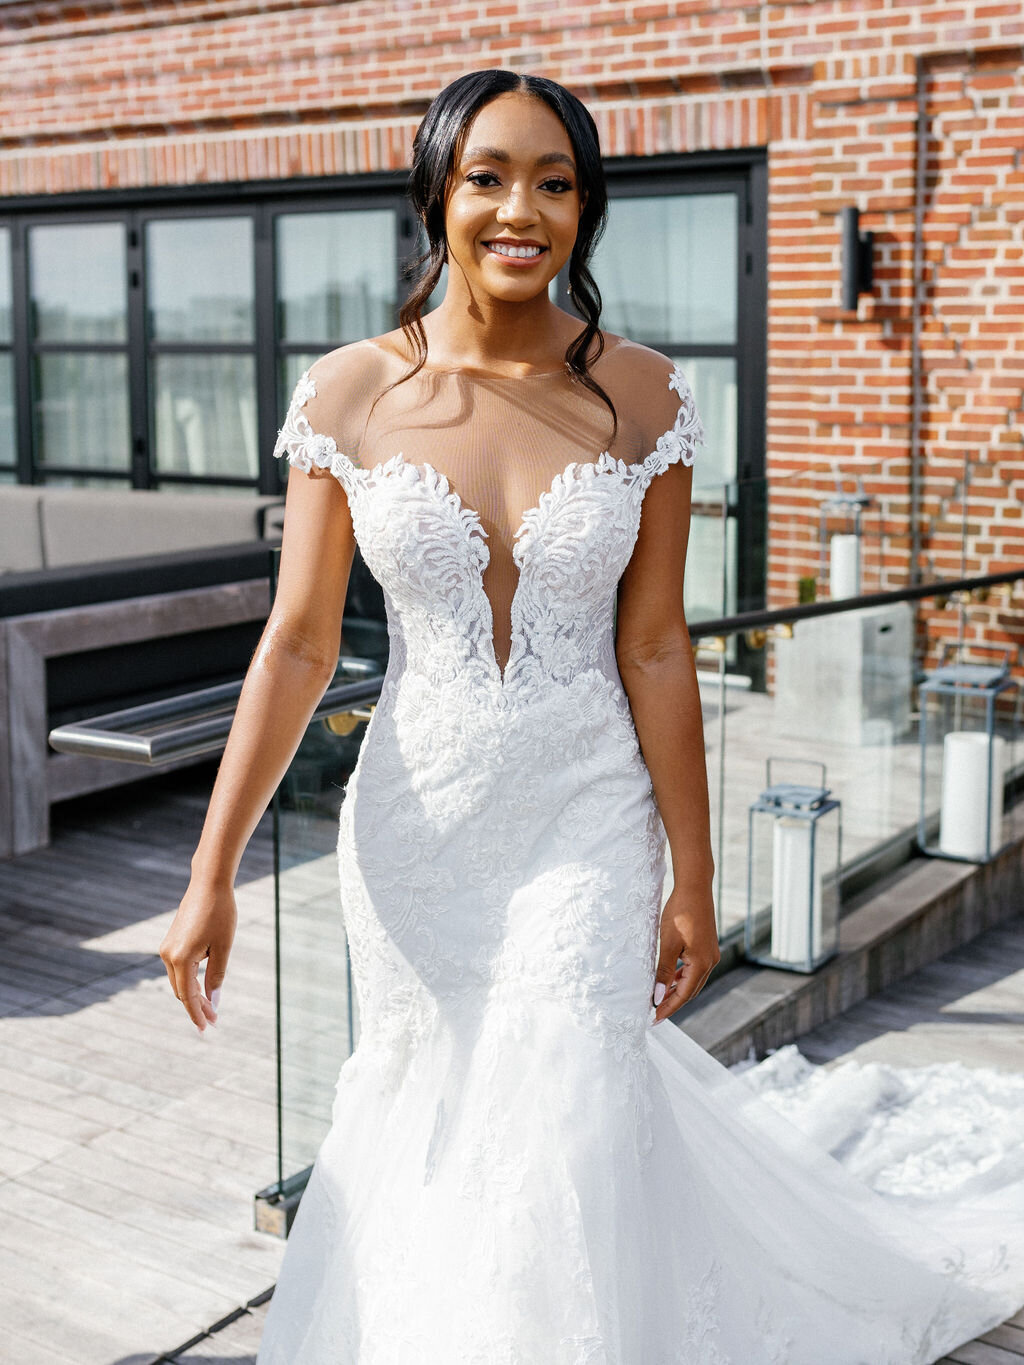 Jayne Heir Weddings and Events - Washington DC Metropolitan Area Wedding and Event Planner - Modern, Stylish, Custom, Top, Best Photo - 15